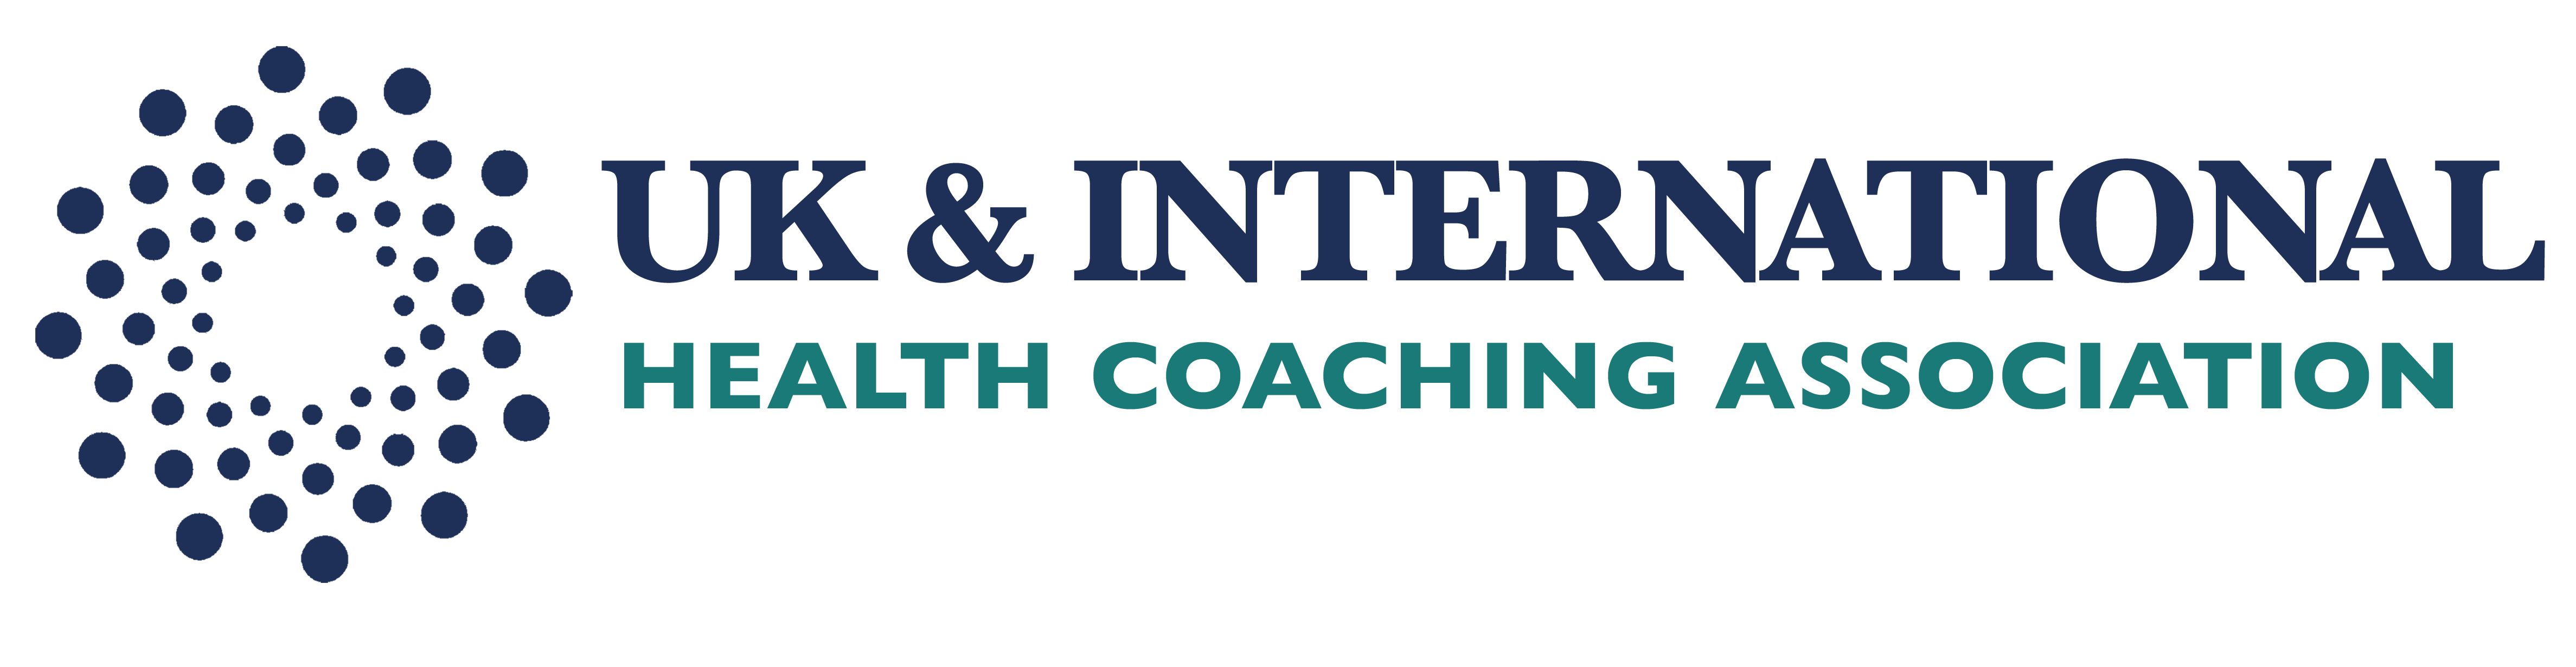 UK & International Health Coaching Association